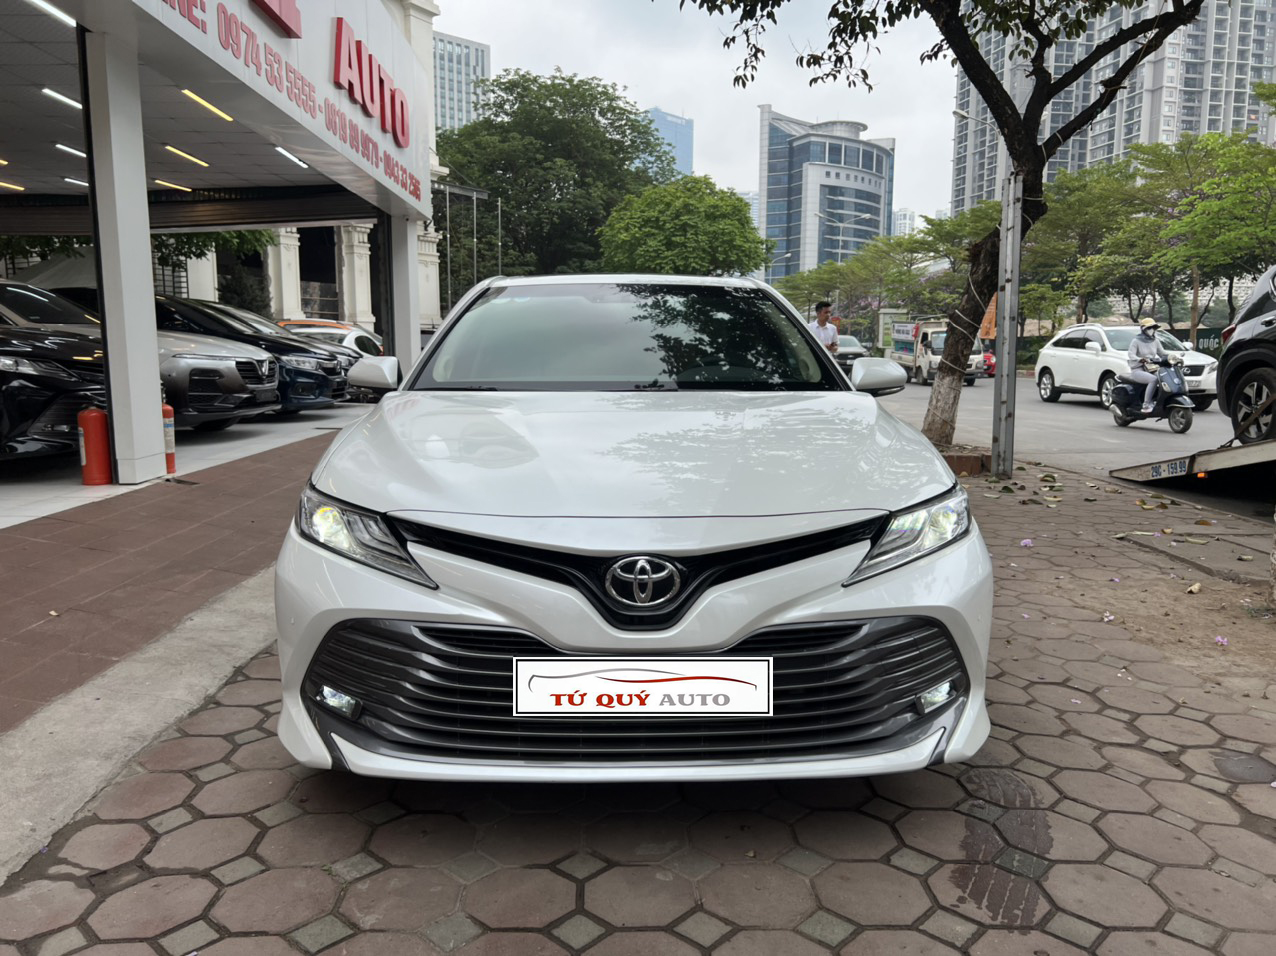 Toyota Camry 2019 giá bao nhiêu  MuasamXecom